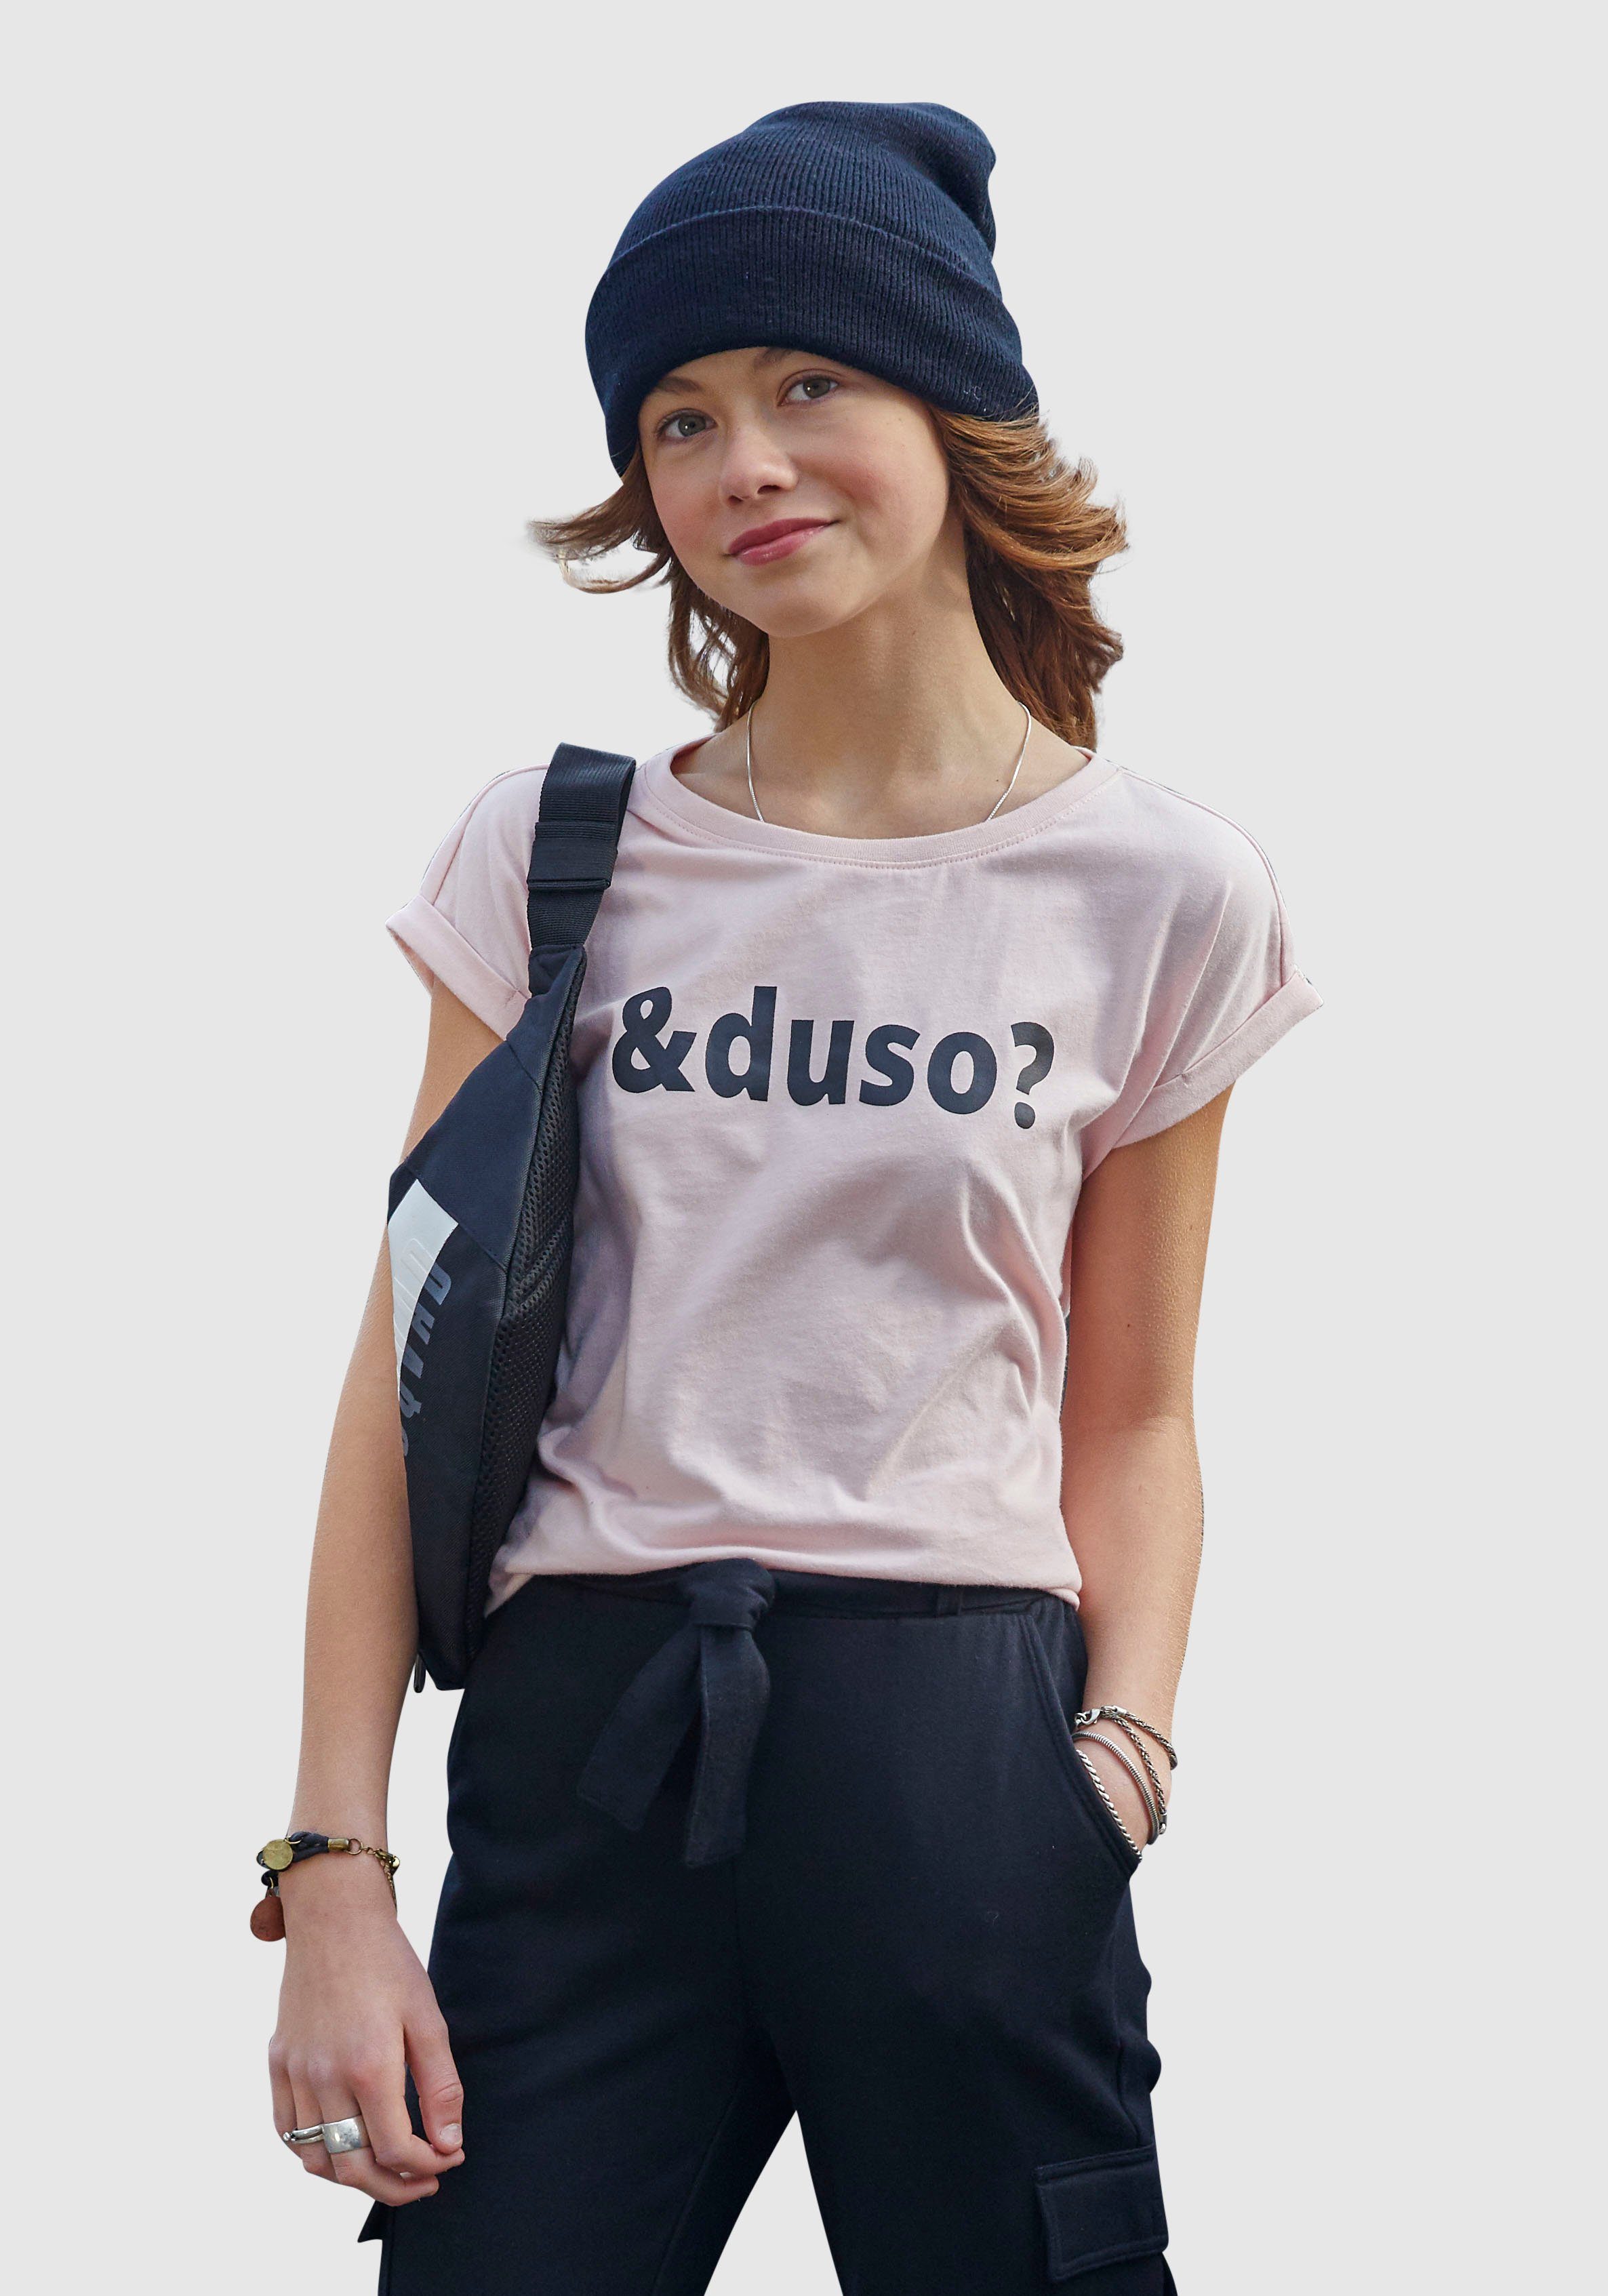 T-Shirt KIDSWORLD bequemer &duso? in Passform